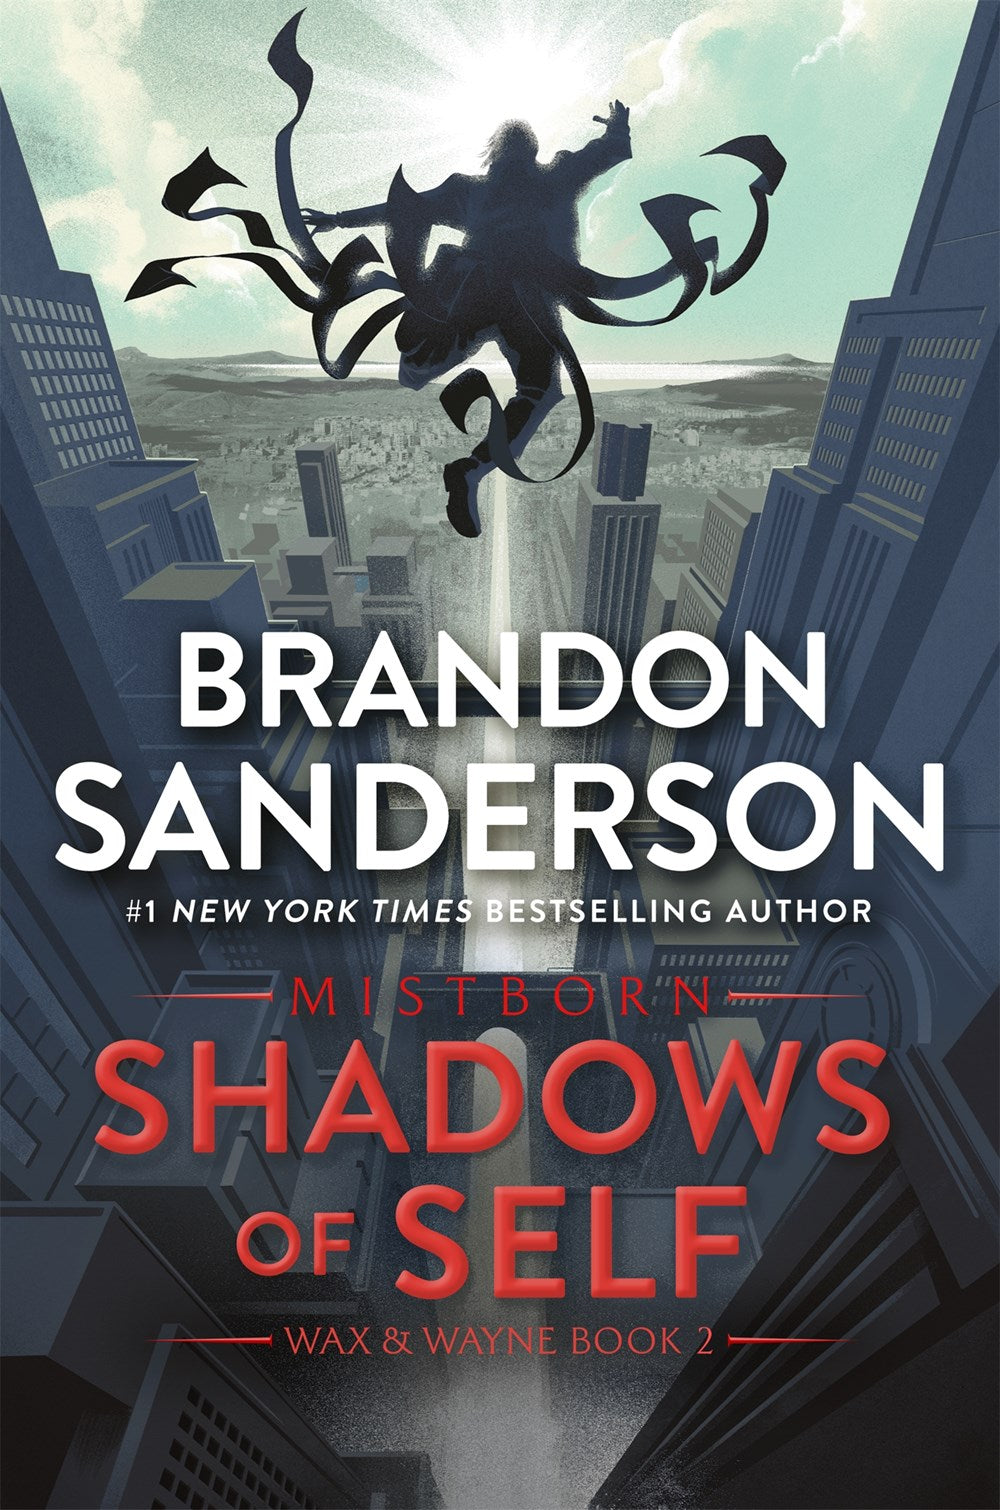 Shadows of Self: A Mistborn Novel by Brandon Sanderson (Book 5)